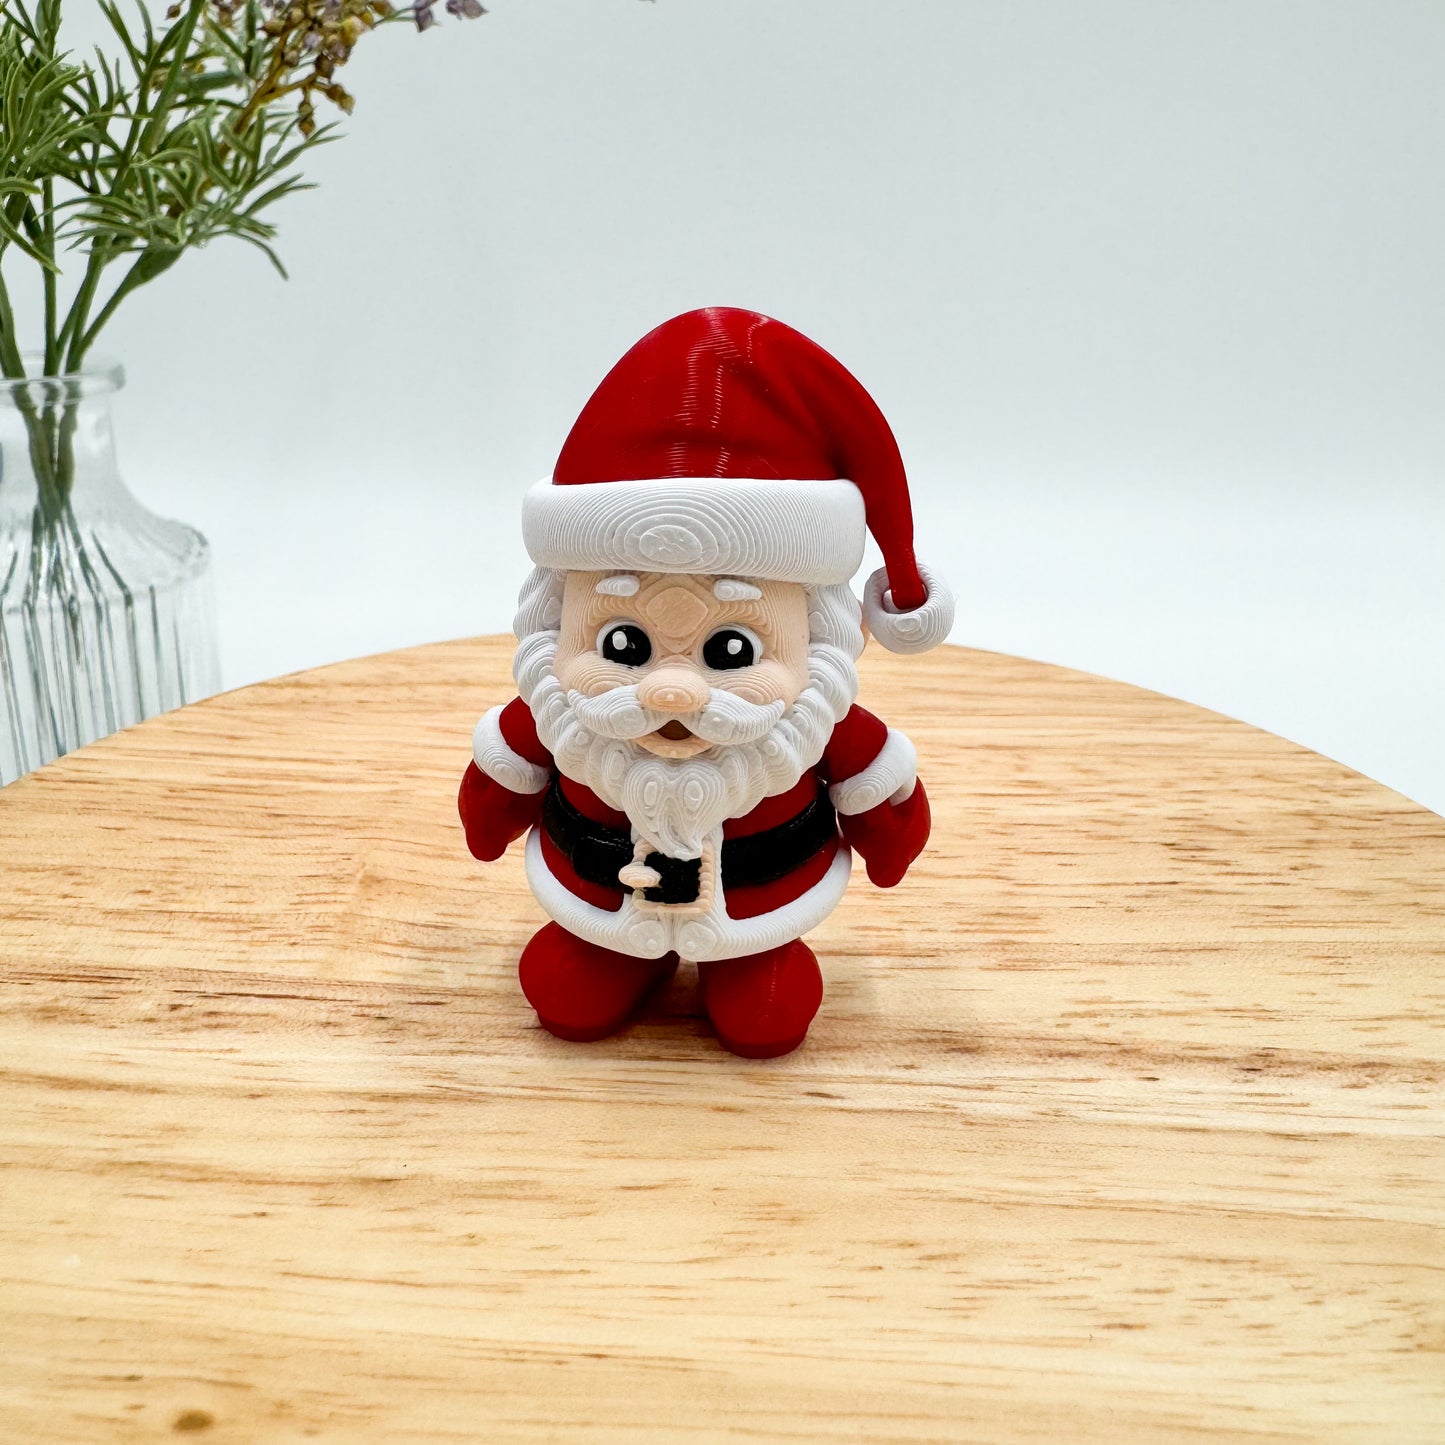 Holiday Mini Pocket Friends - Multiple Holidays, Articulating Figurines